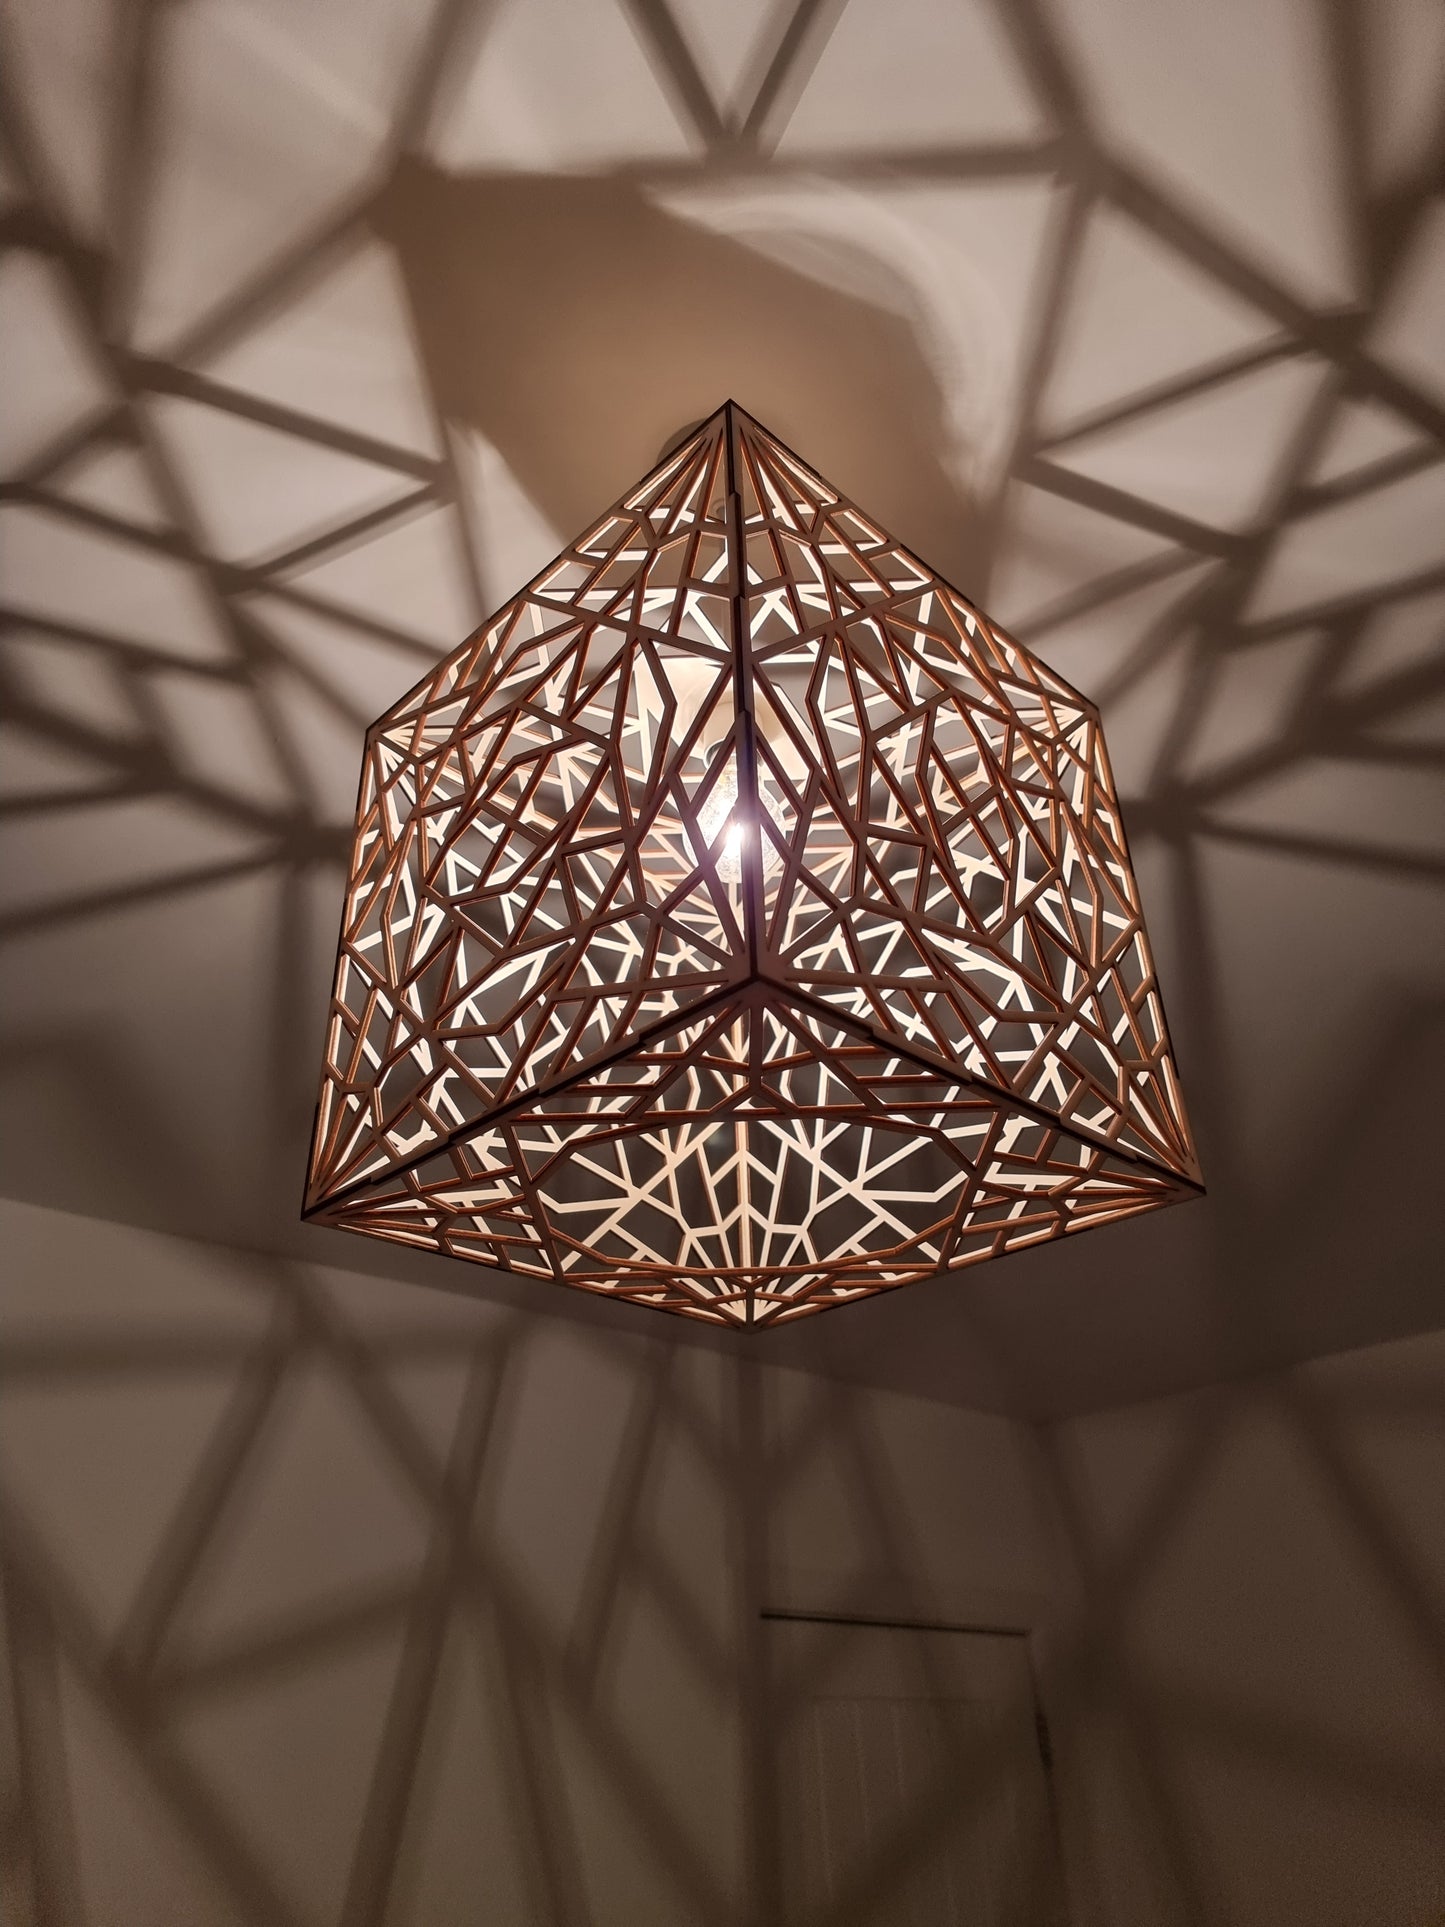 Geometric laser cut wooden light shade, home decor.